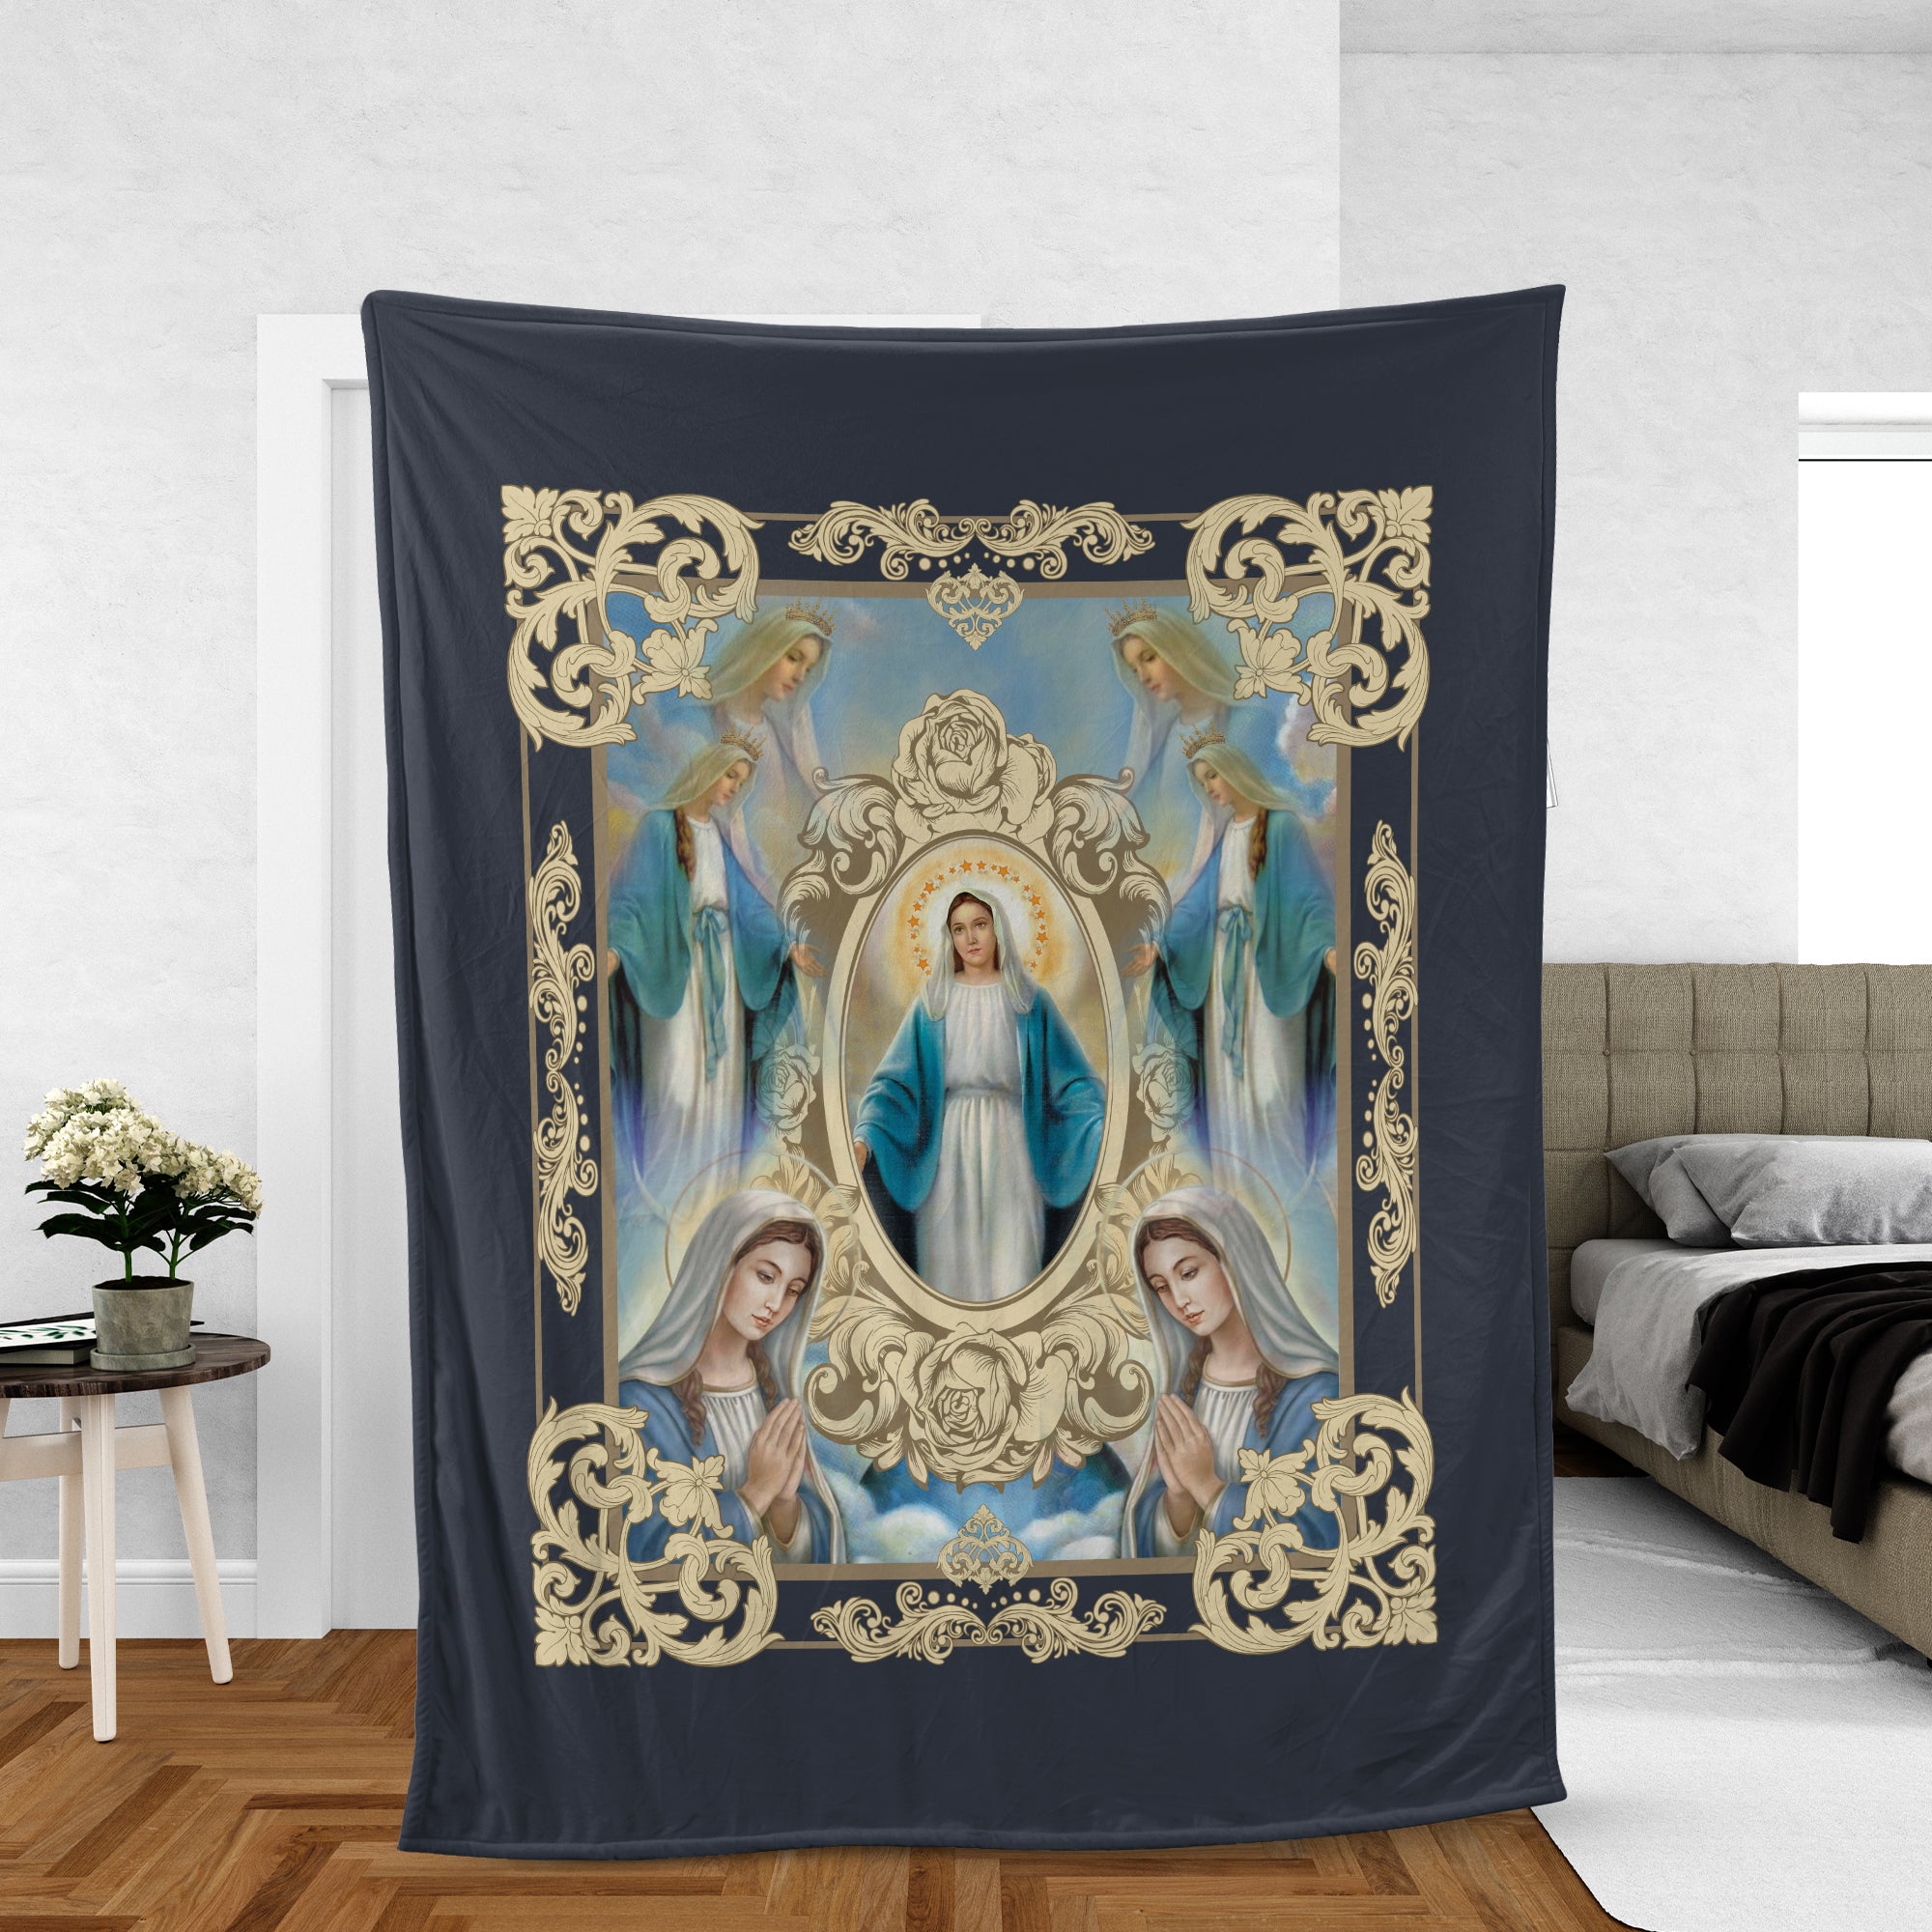 Christian Throw Blanket, Faith Blanket, Maria Blanket, Inspirational Gift, Jesus Gift - Gold Mirror, Infinite Halo, Pray For Healing